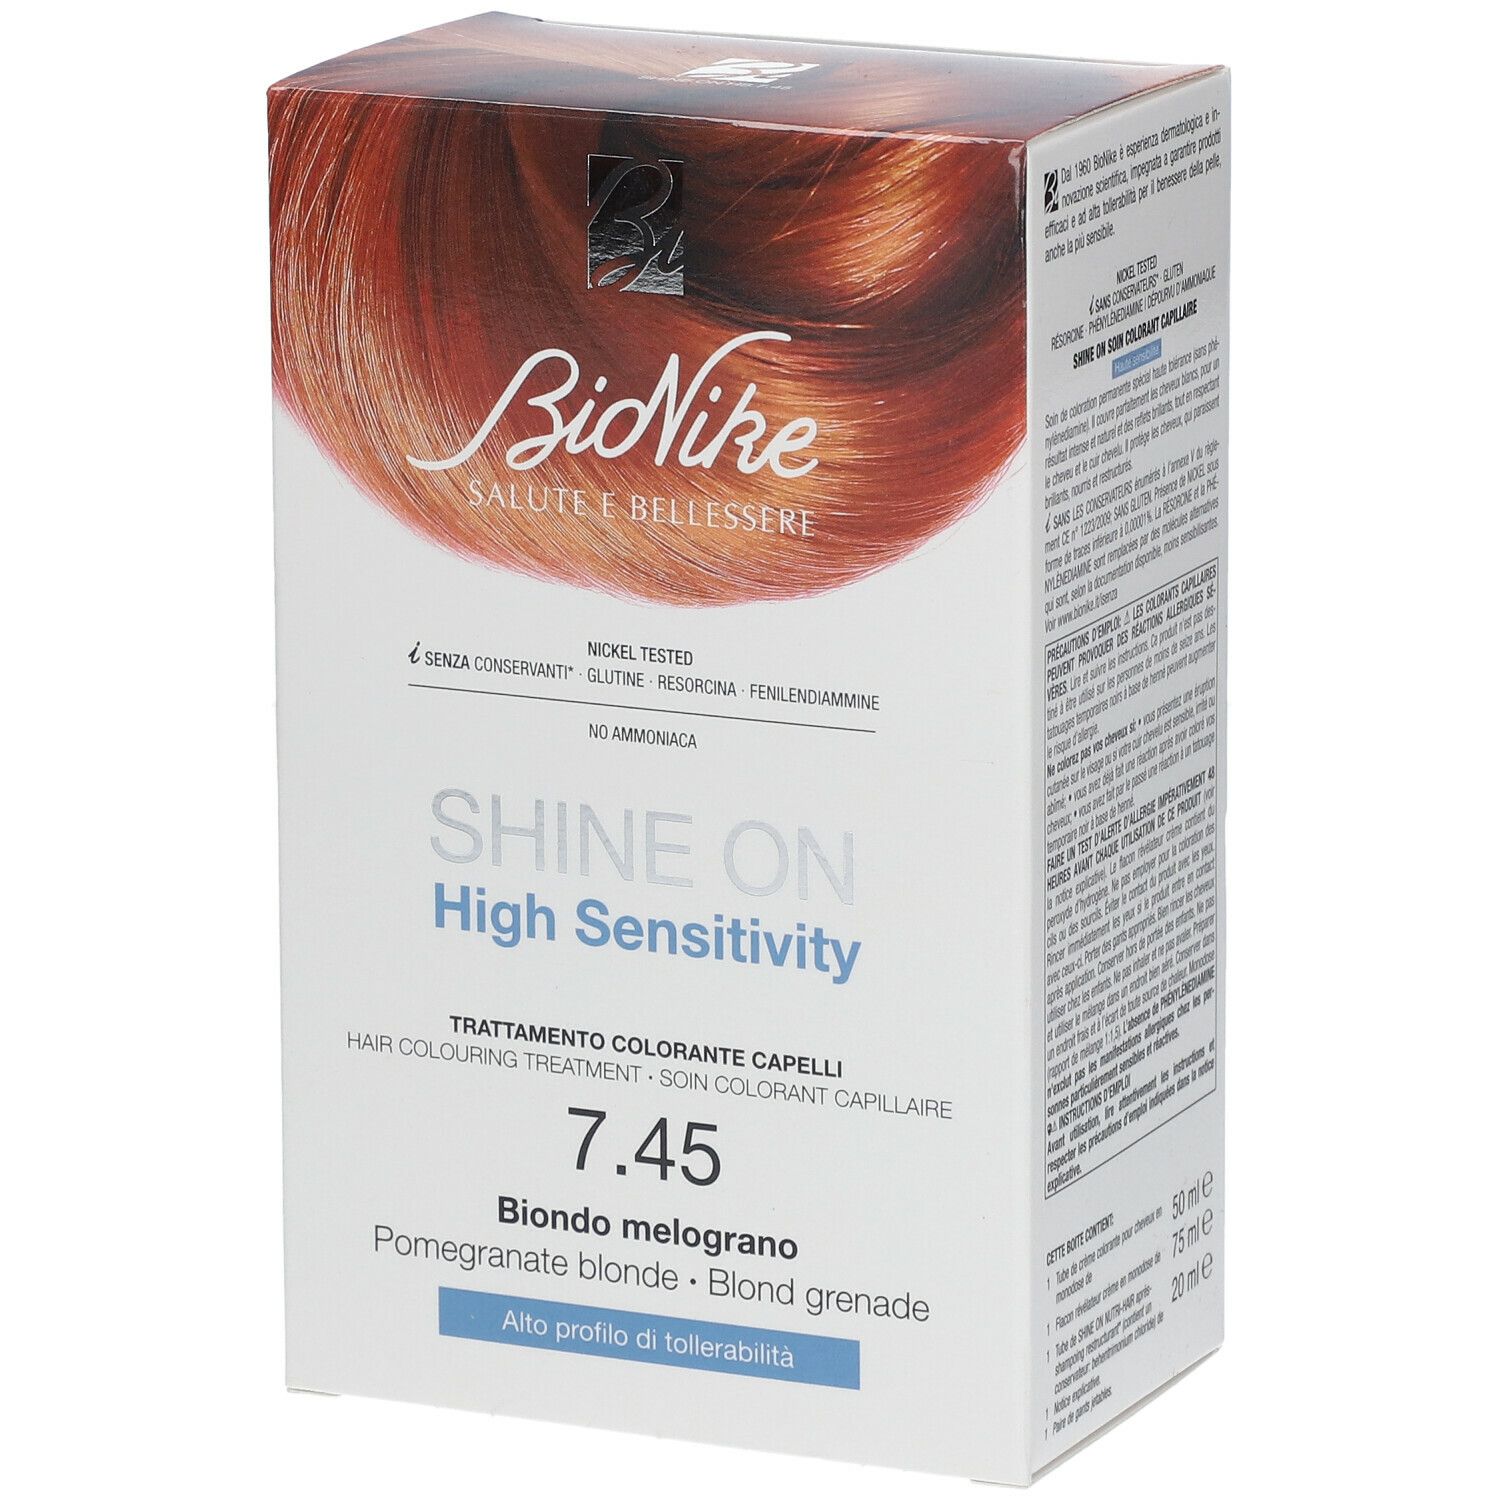 BioNike Shine ON High Sensitivity 7.45 Pomegranate Blonde